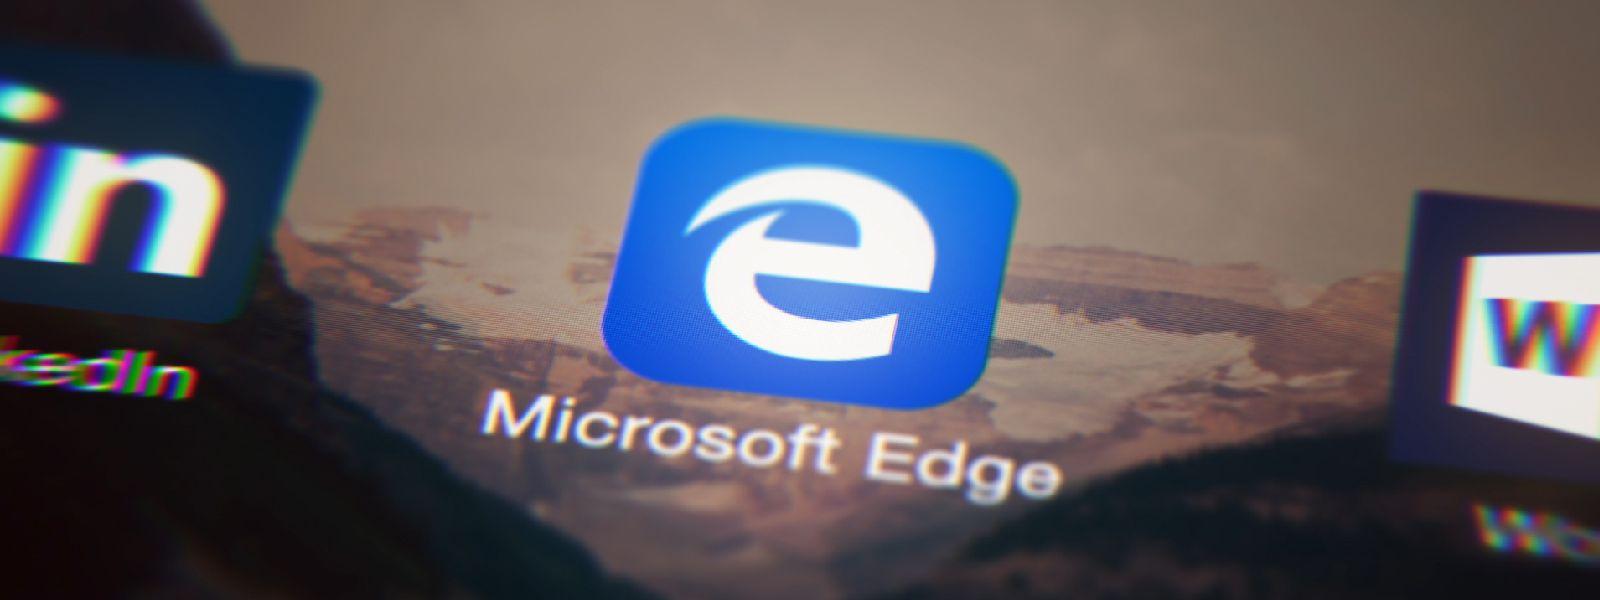 Old Microsoft Edge Logo - Microsoft Edge App Download for Android and iOS | Microsoft Edge